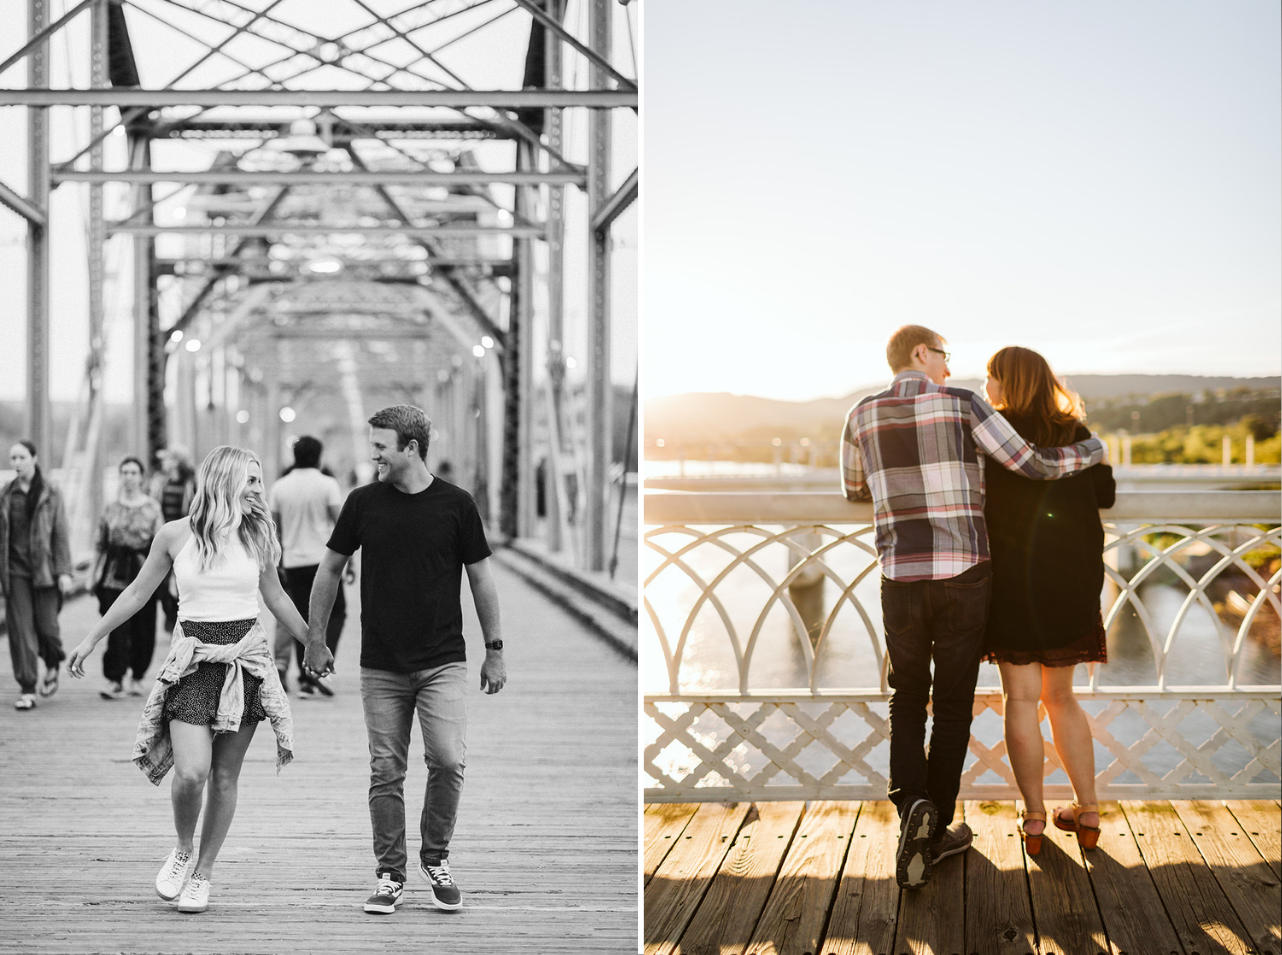 Couples embrace on the walking bridge near Coolidge Park.